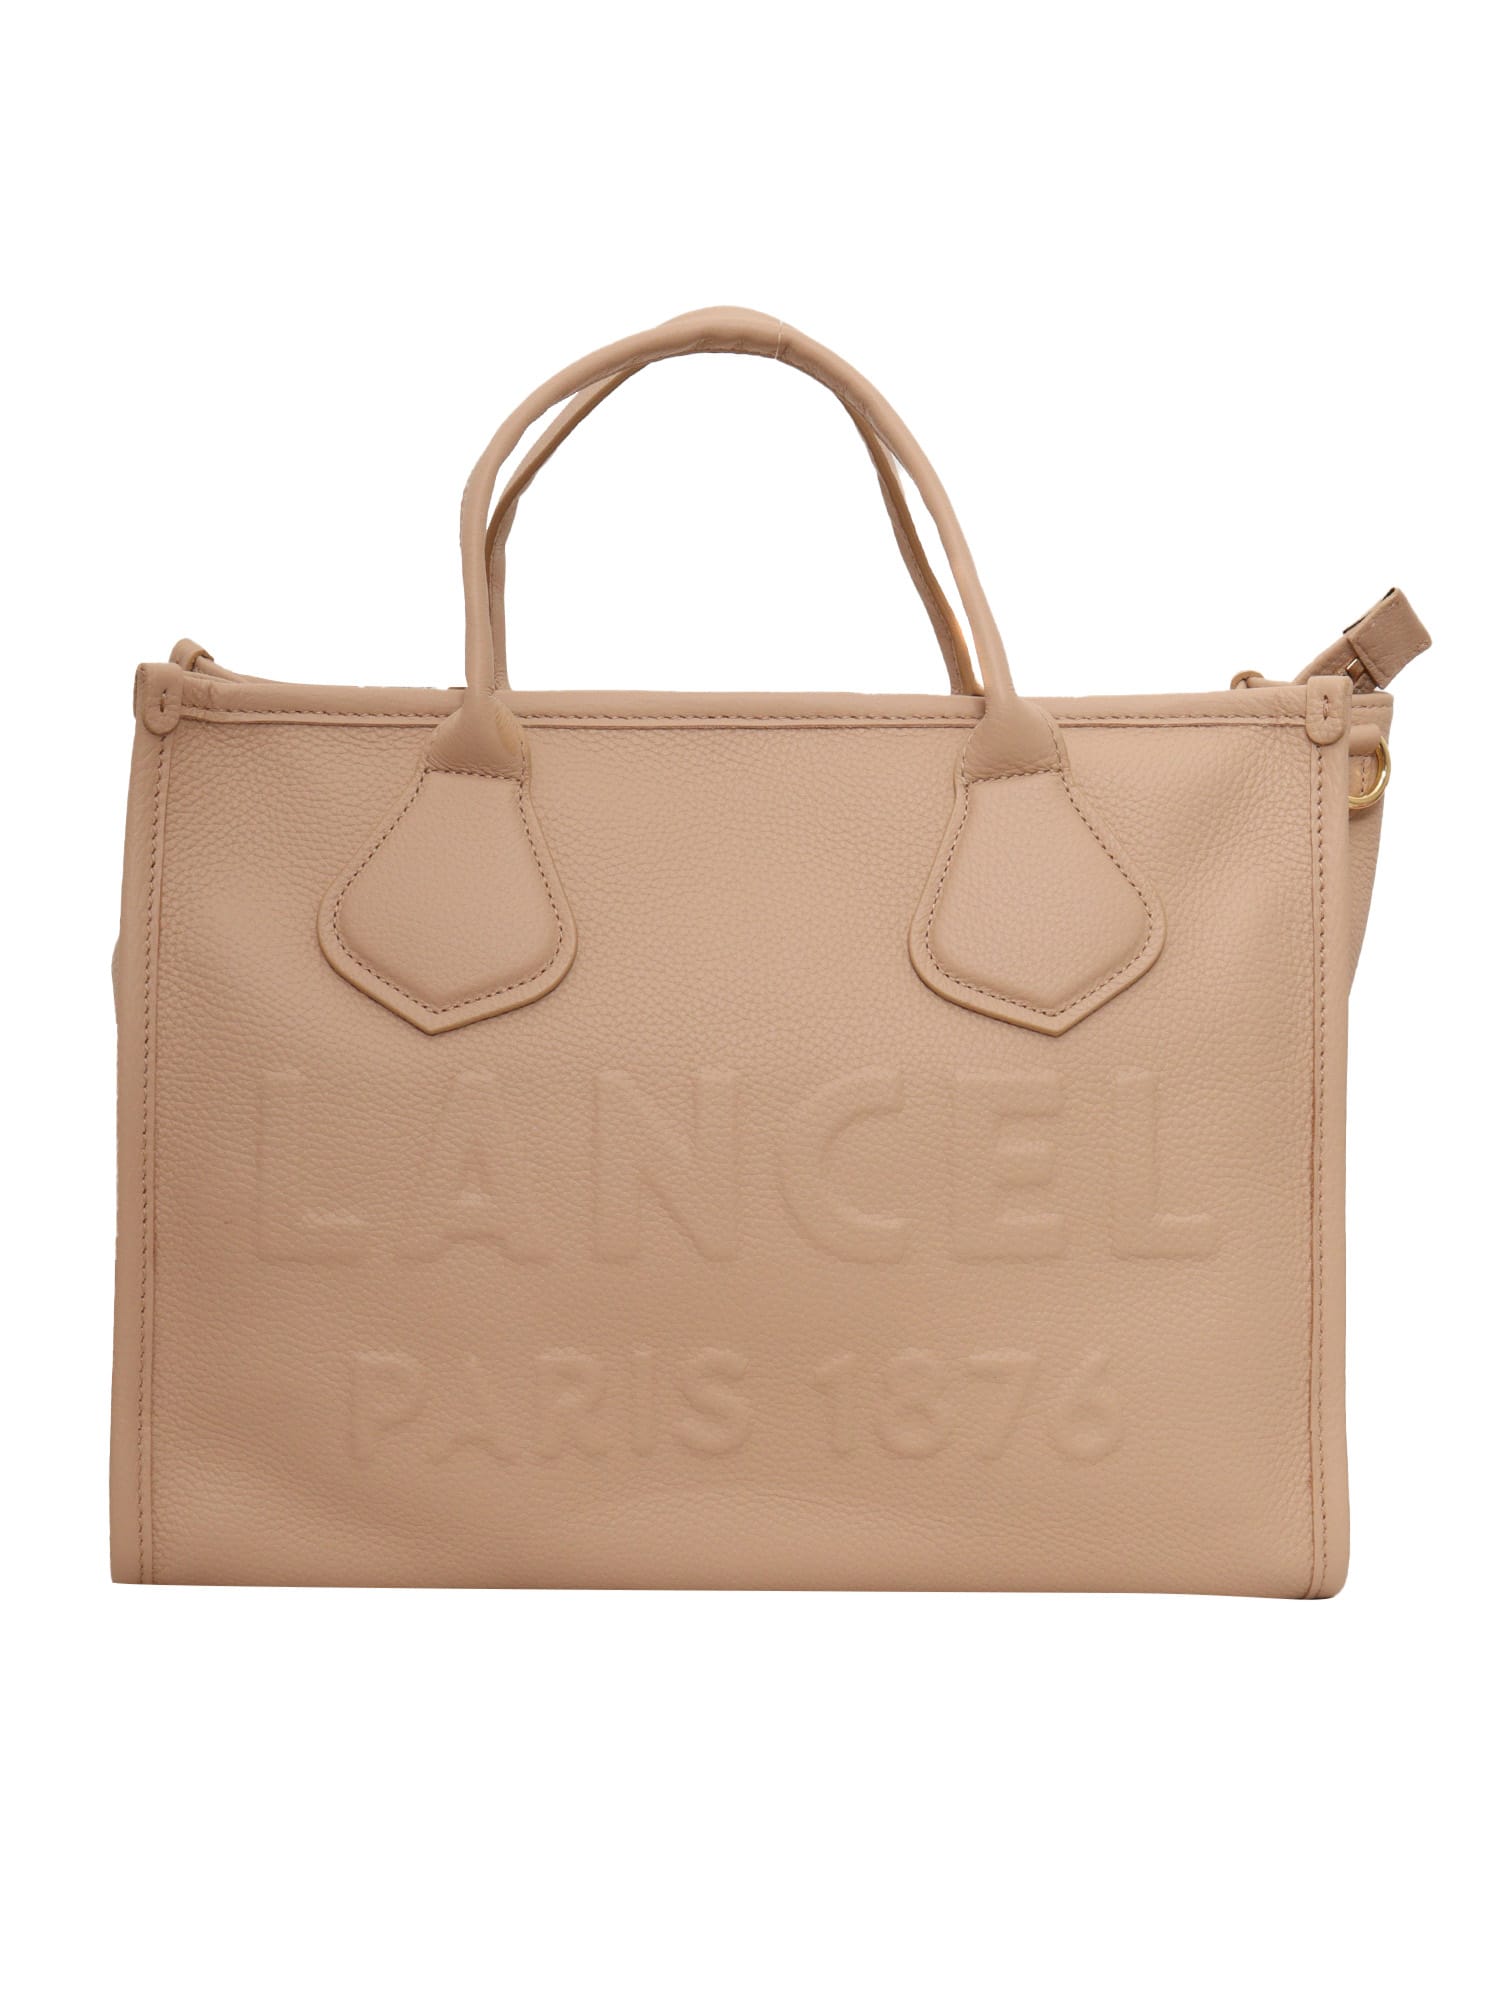 Lancel Cabas Bag